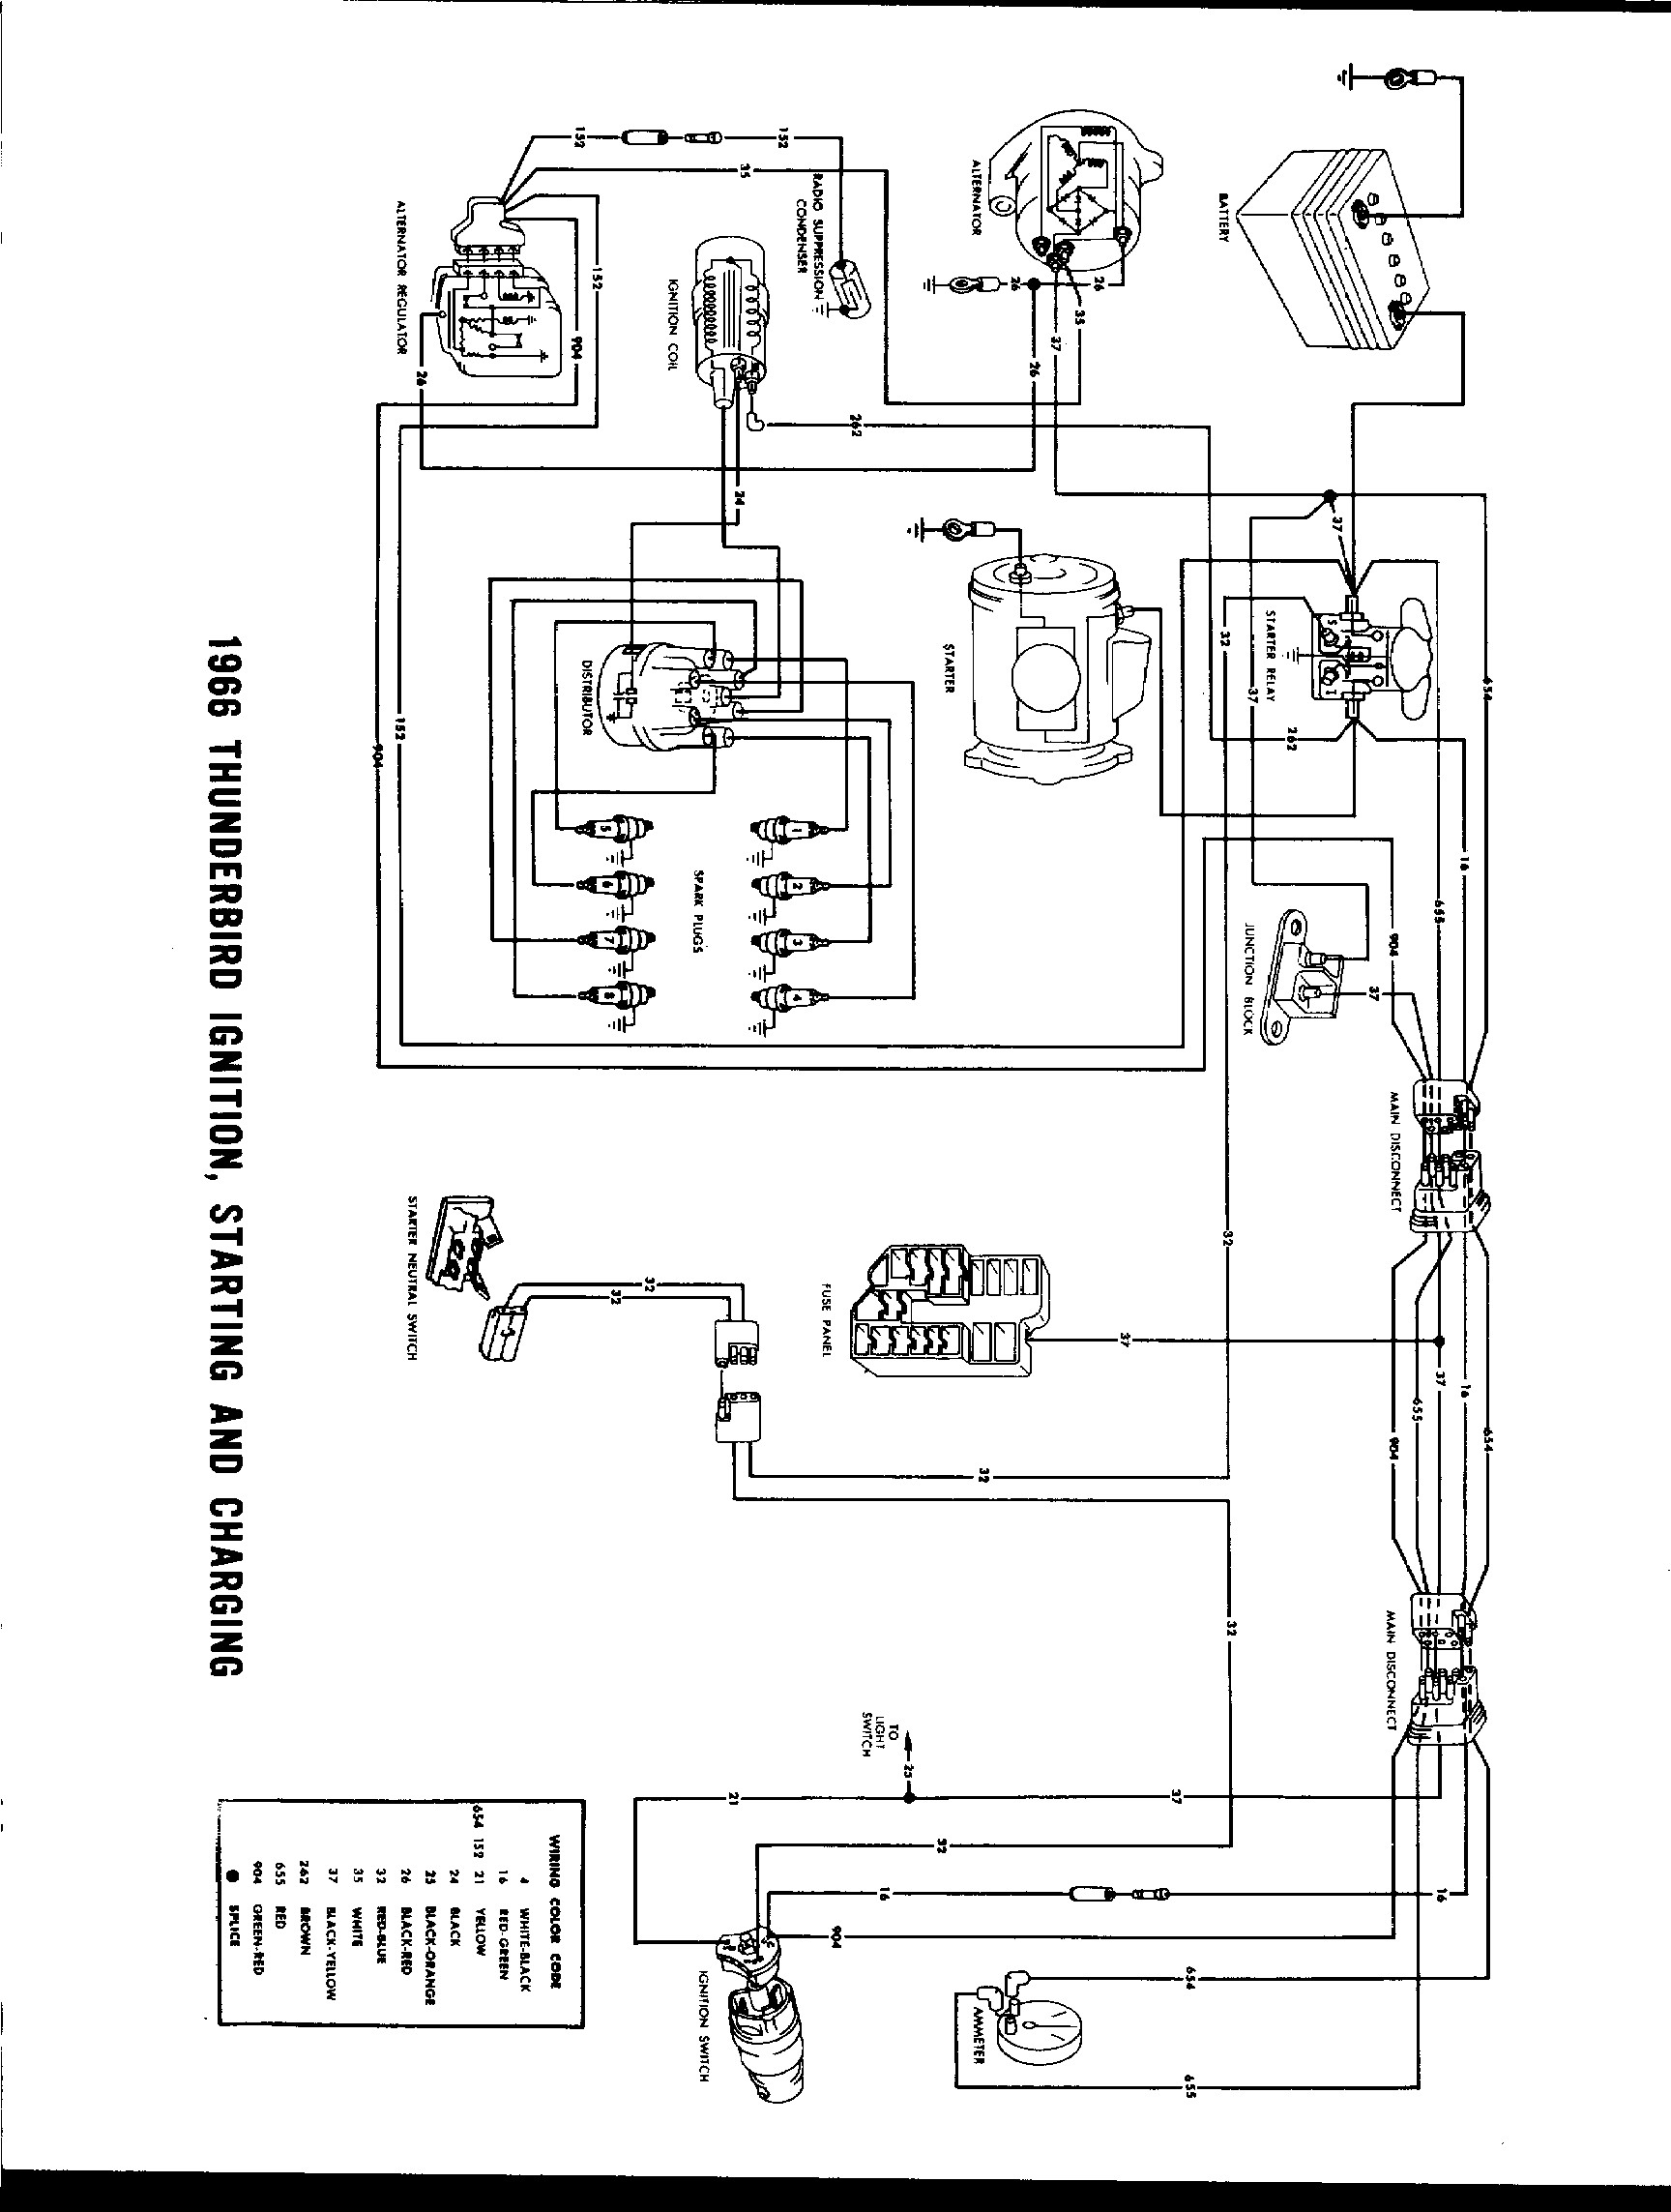 Allen Bradley Motor Starter Wiring Diagram Start Stop from detoxicrecenze.com